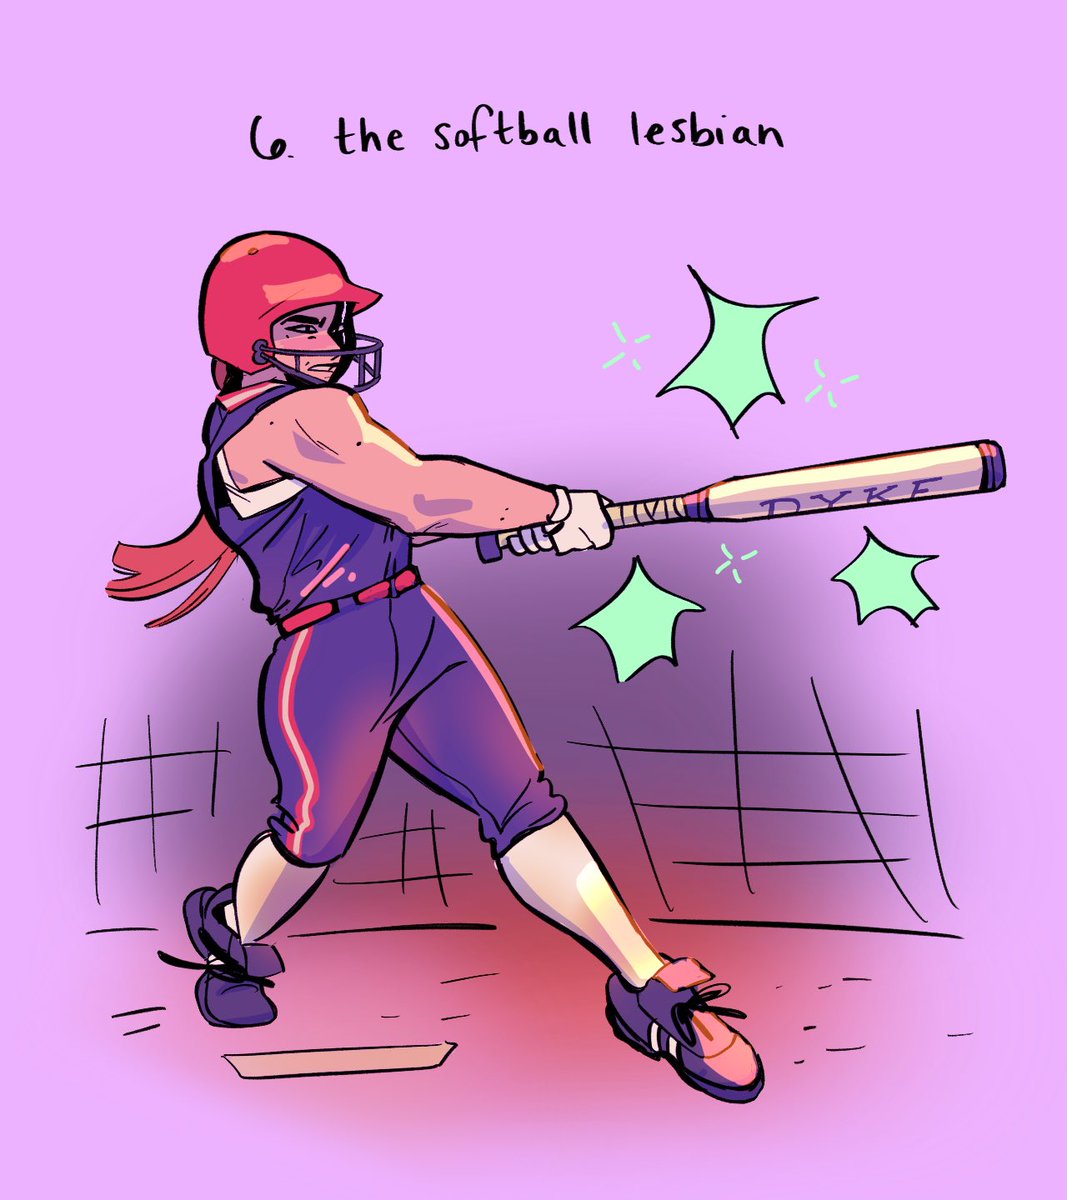 6. the softball lesbian (classic)